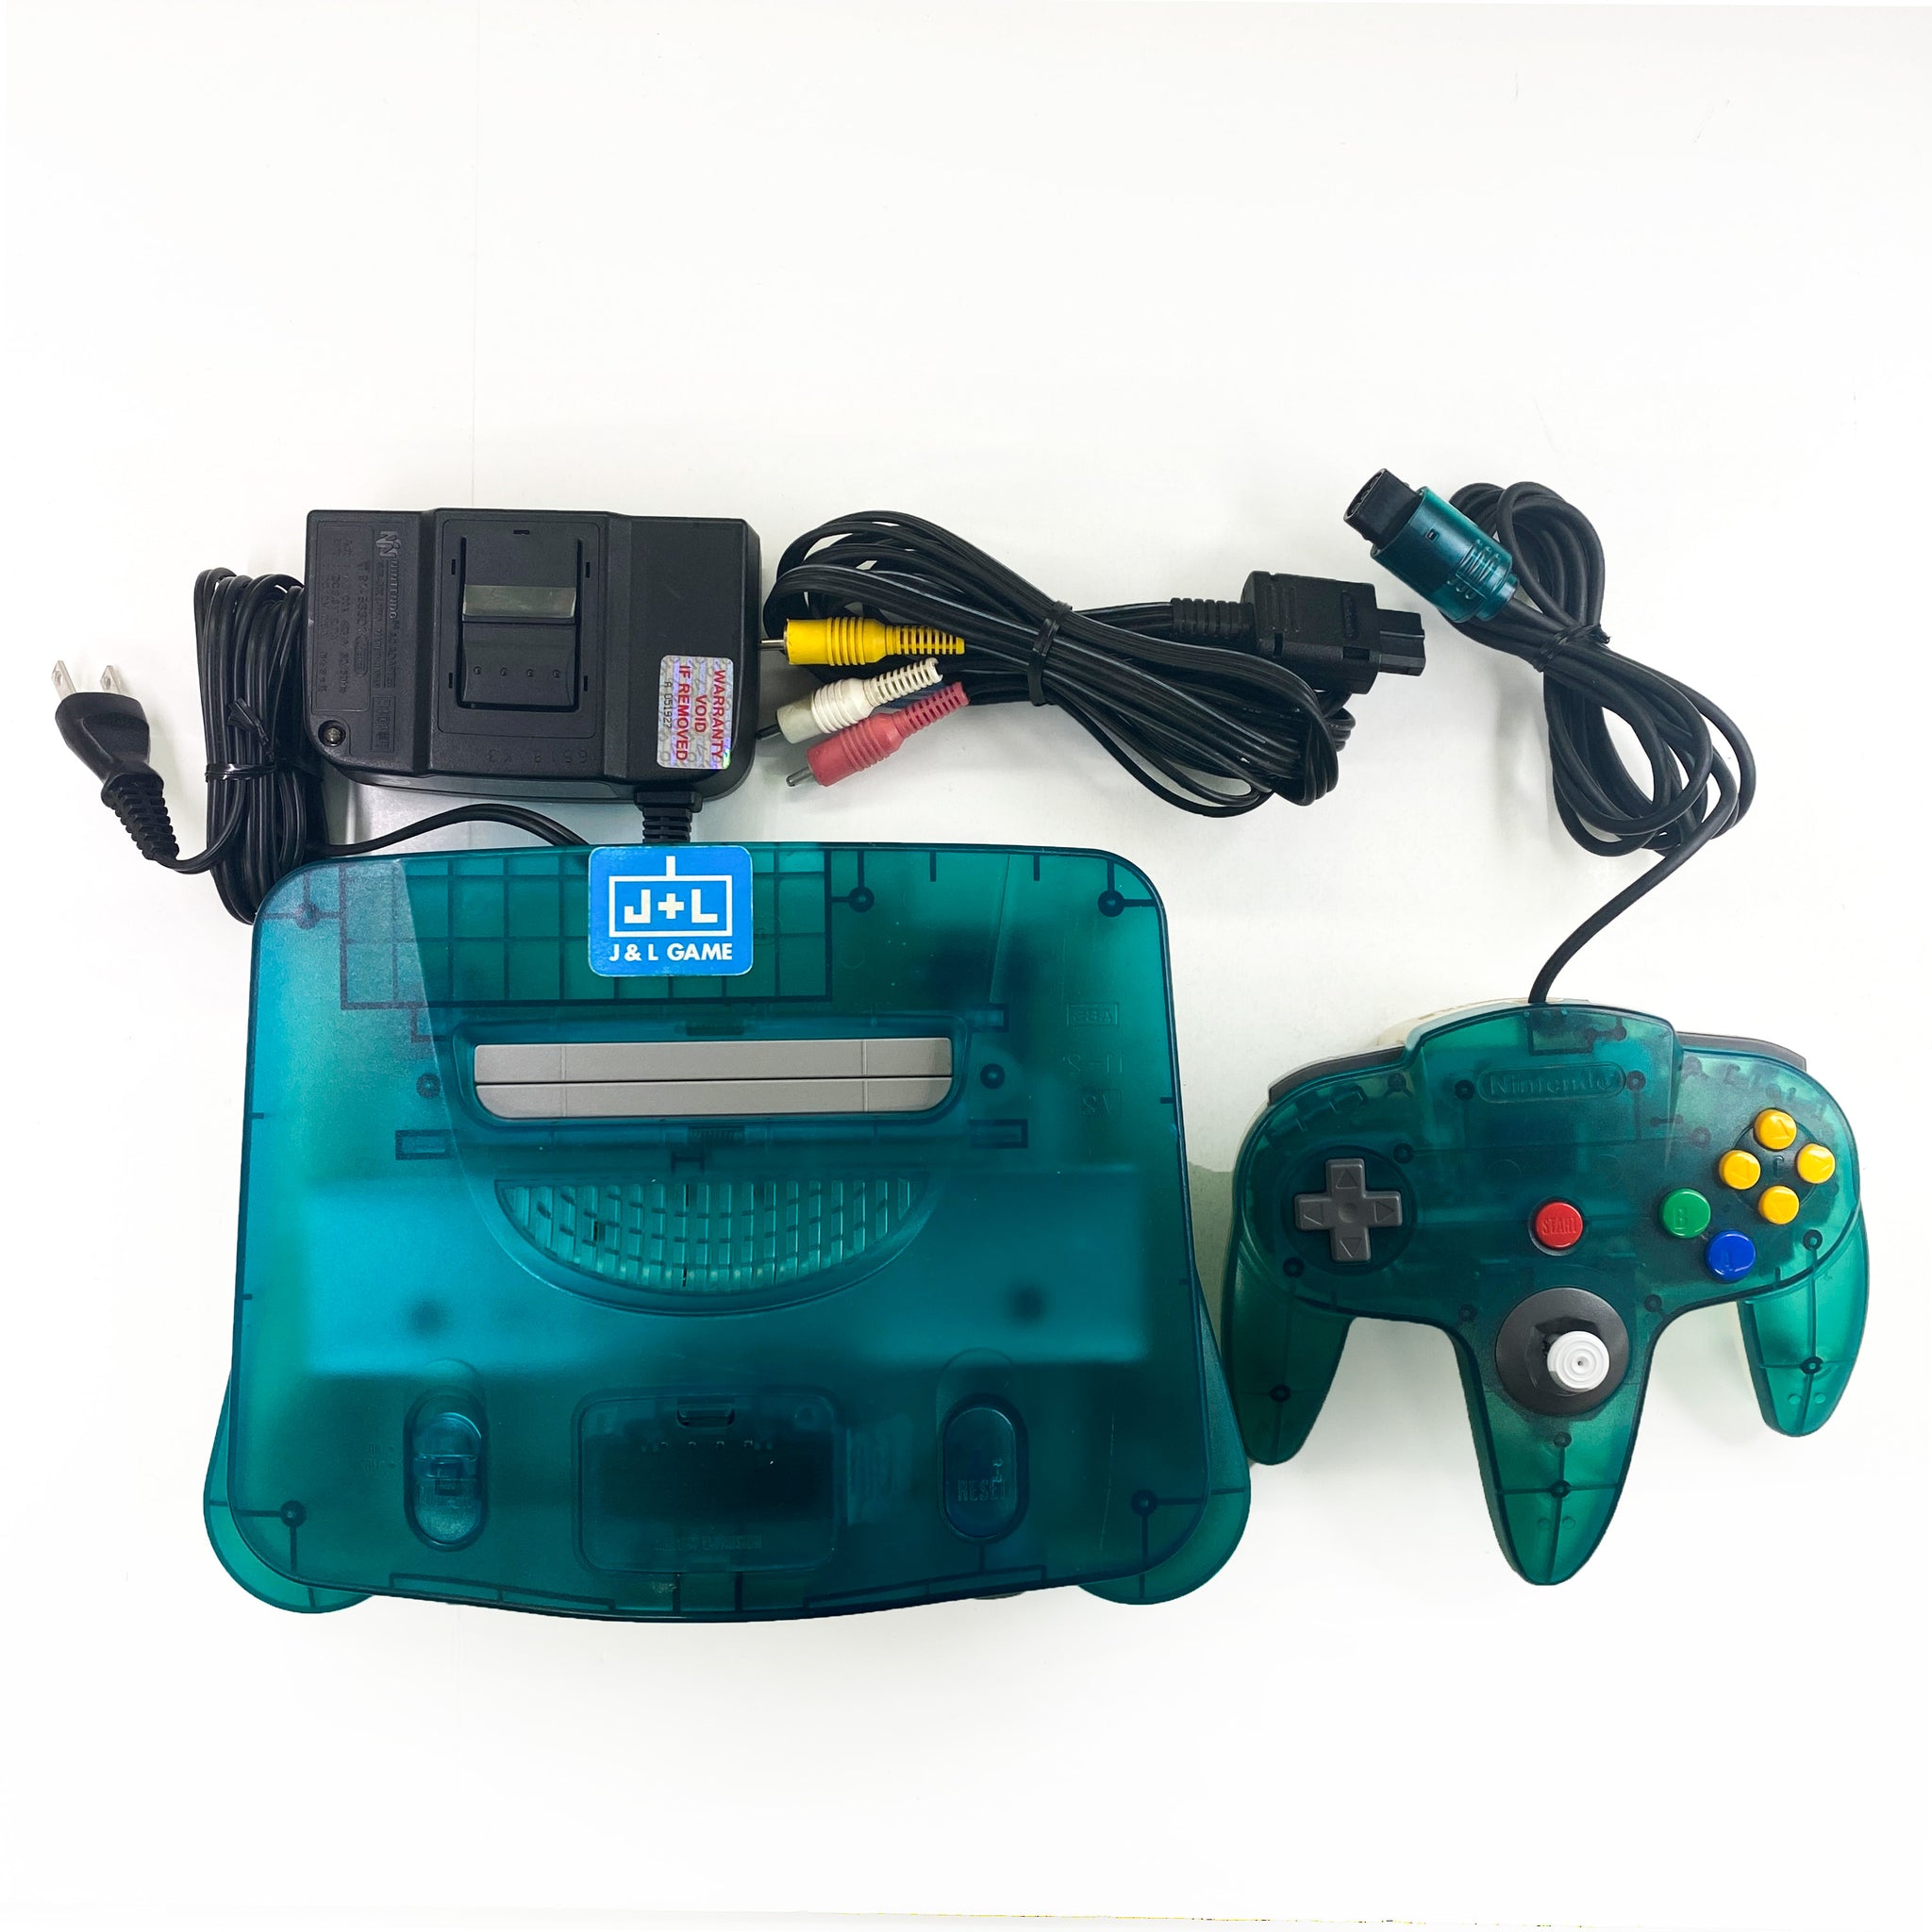 Nintendo 64 Hardware Console (Ice Blue) - (N64) Nintendo 64 [Pre-Owned] CONSOLE Nintendo   